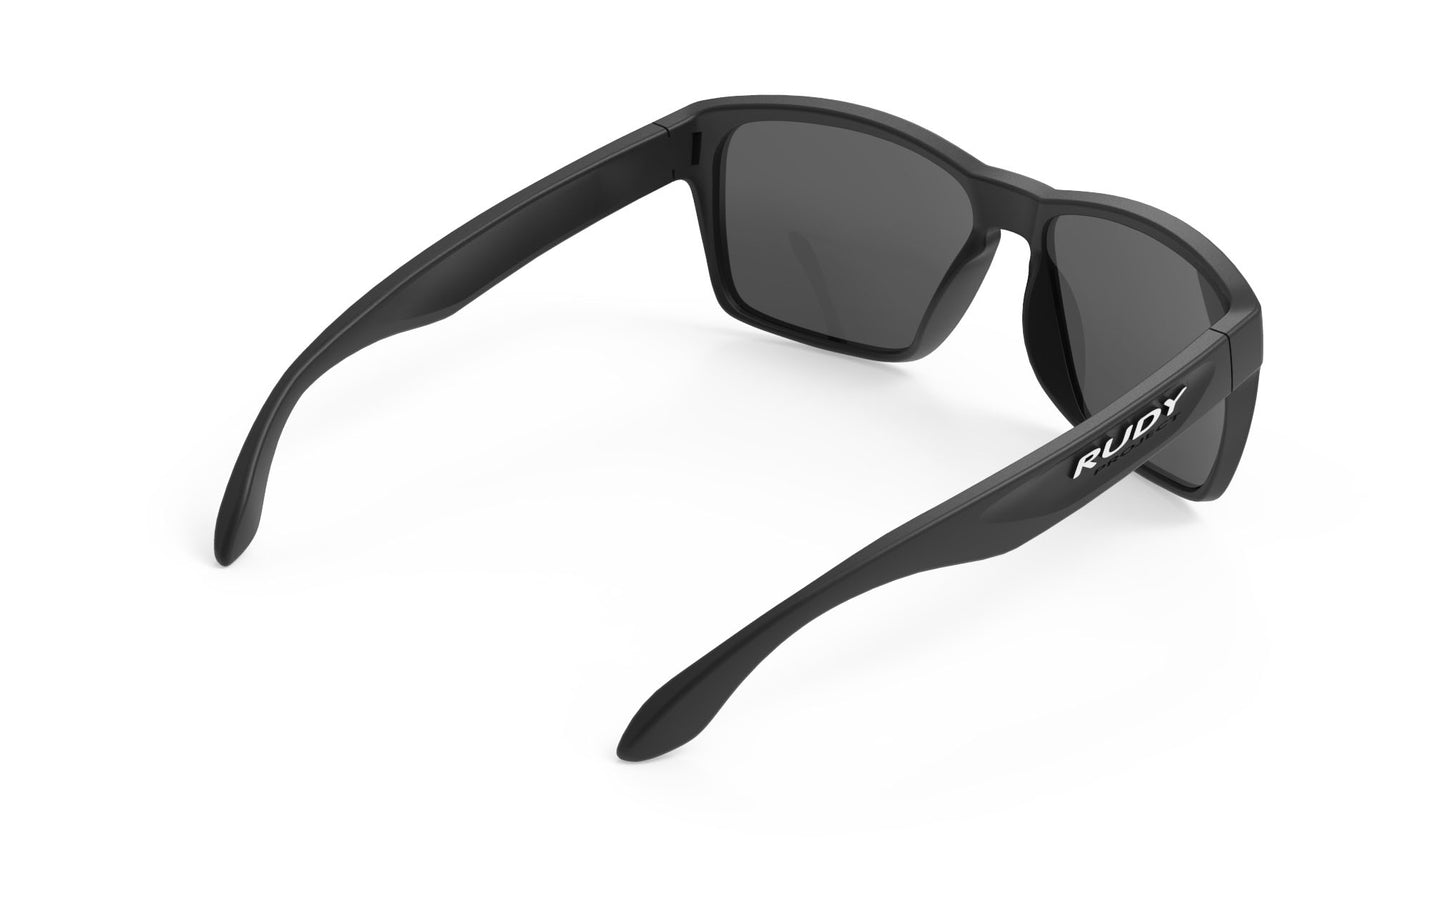 Rudy Project Spinhawk Matte Black - Polar 3Fx Grey Laser Sunglasses